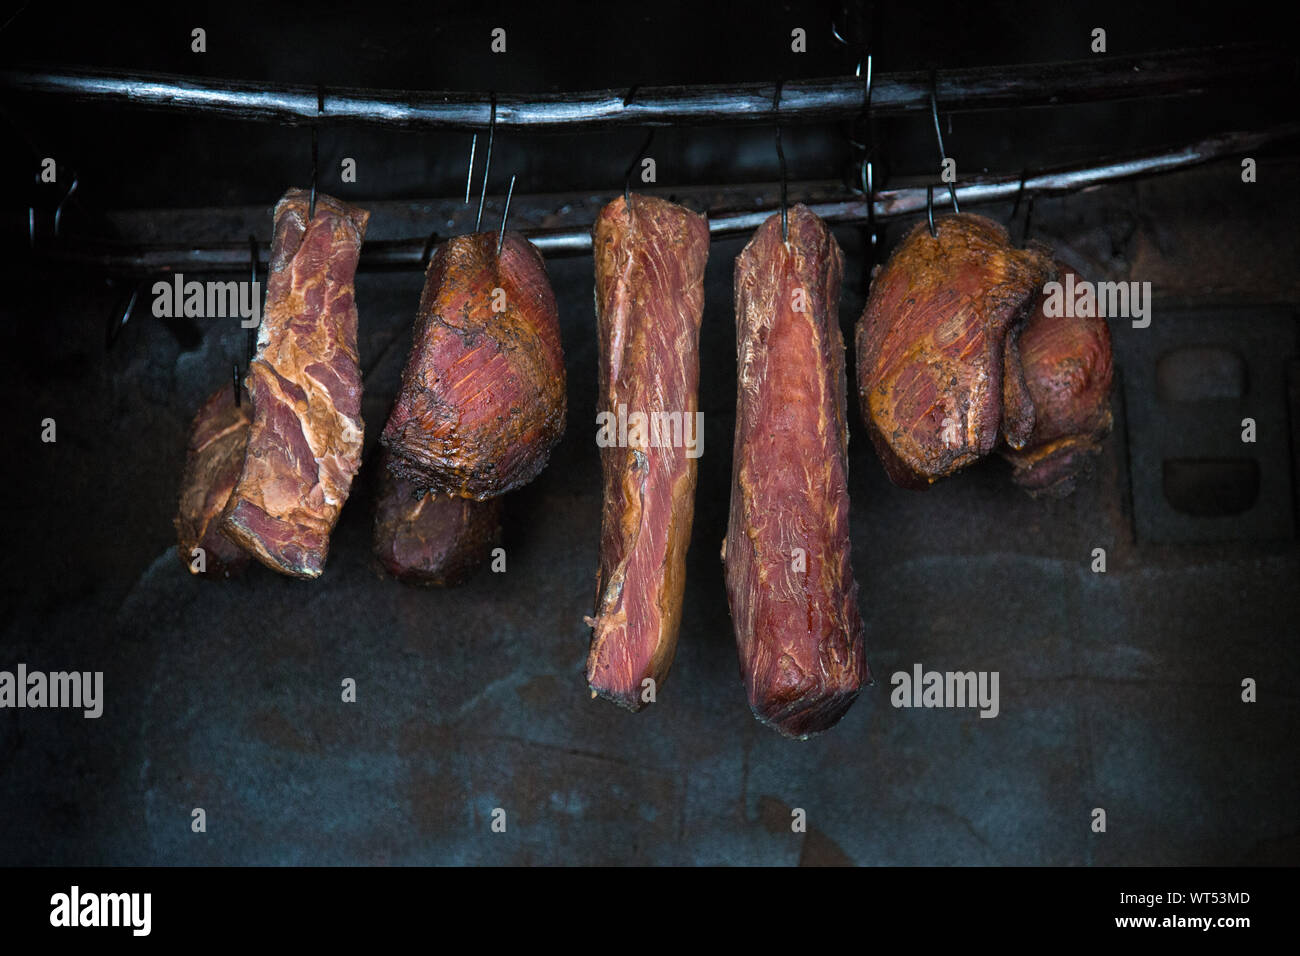 Smoked pork meat in smoker on dark background. Stock Photo